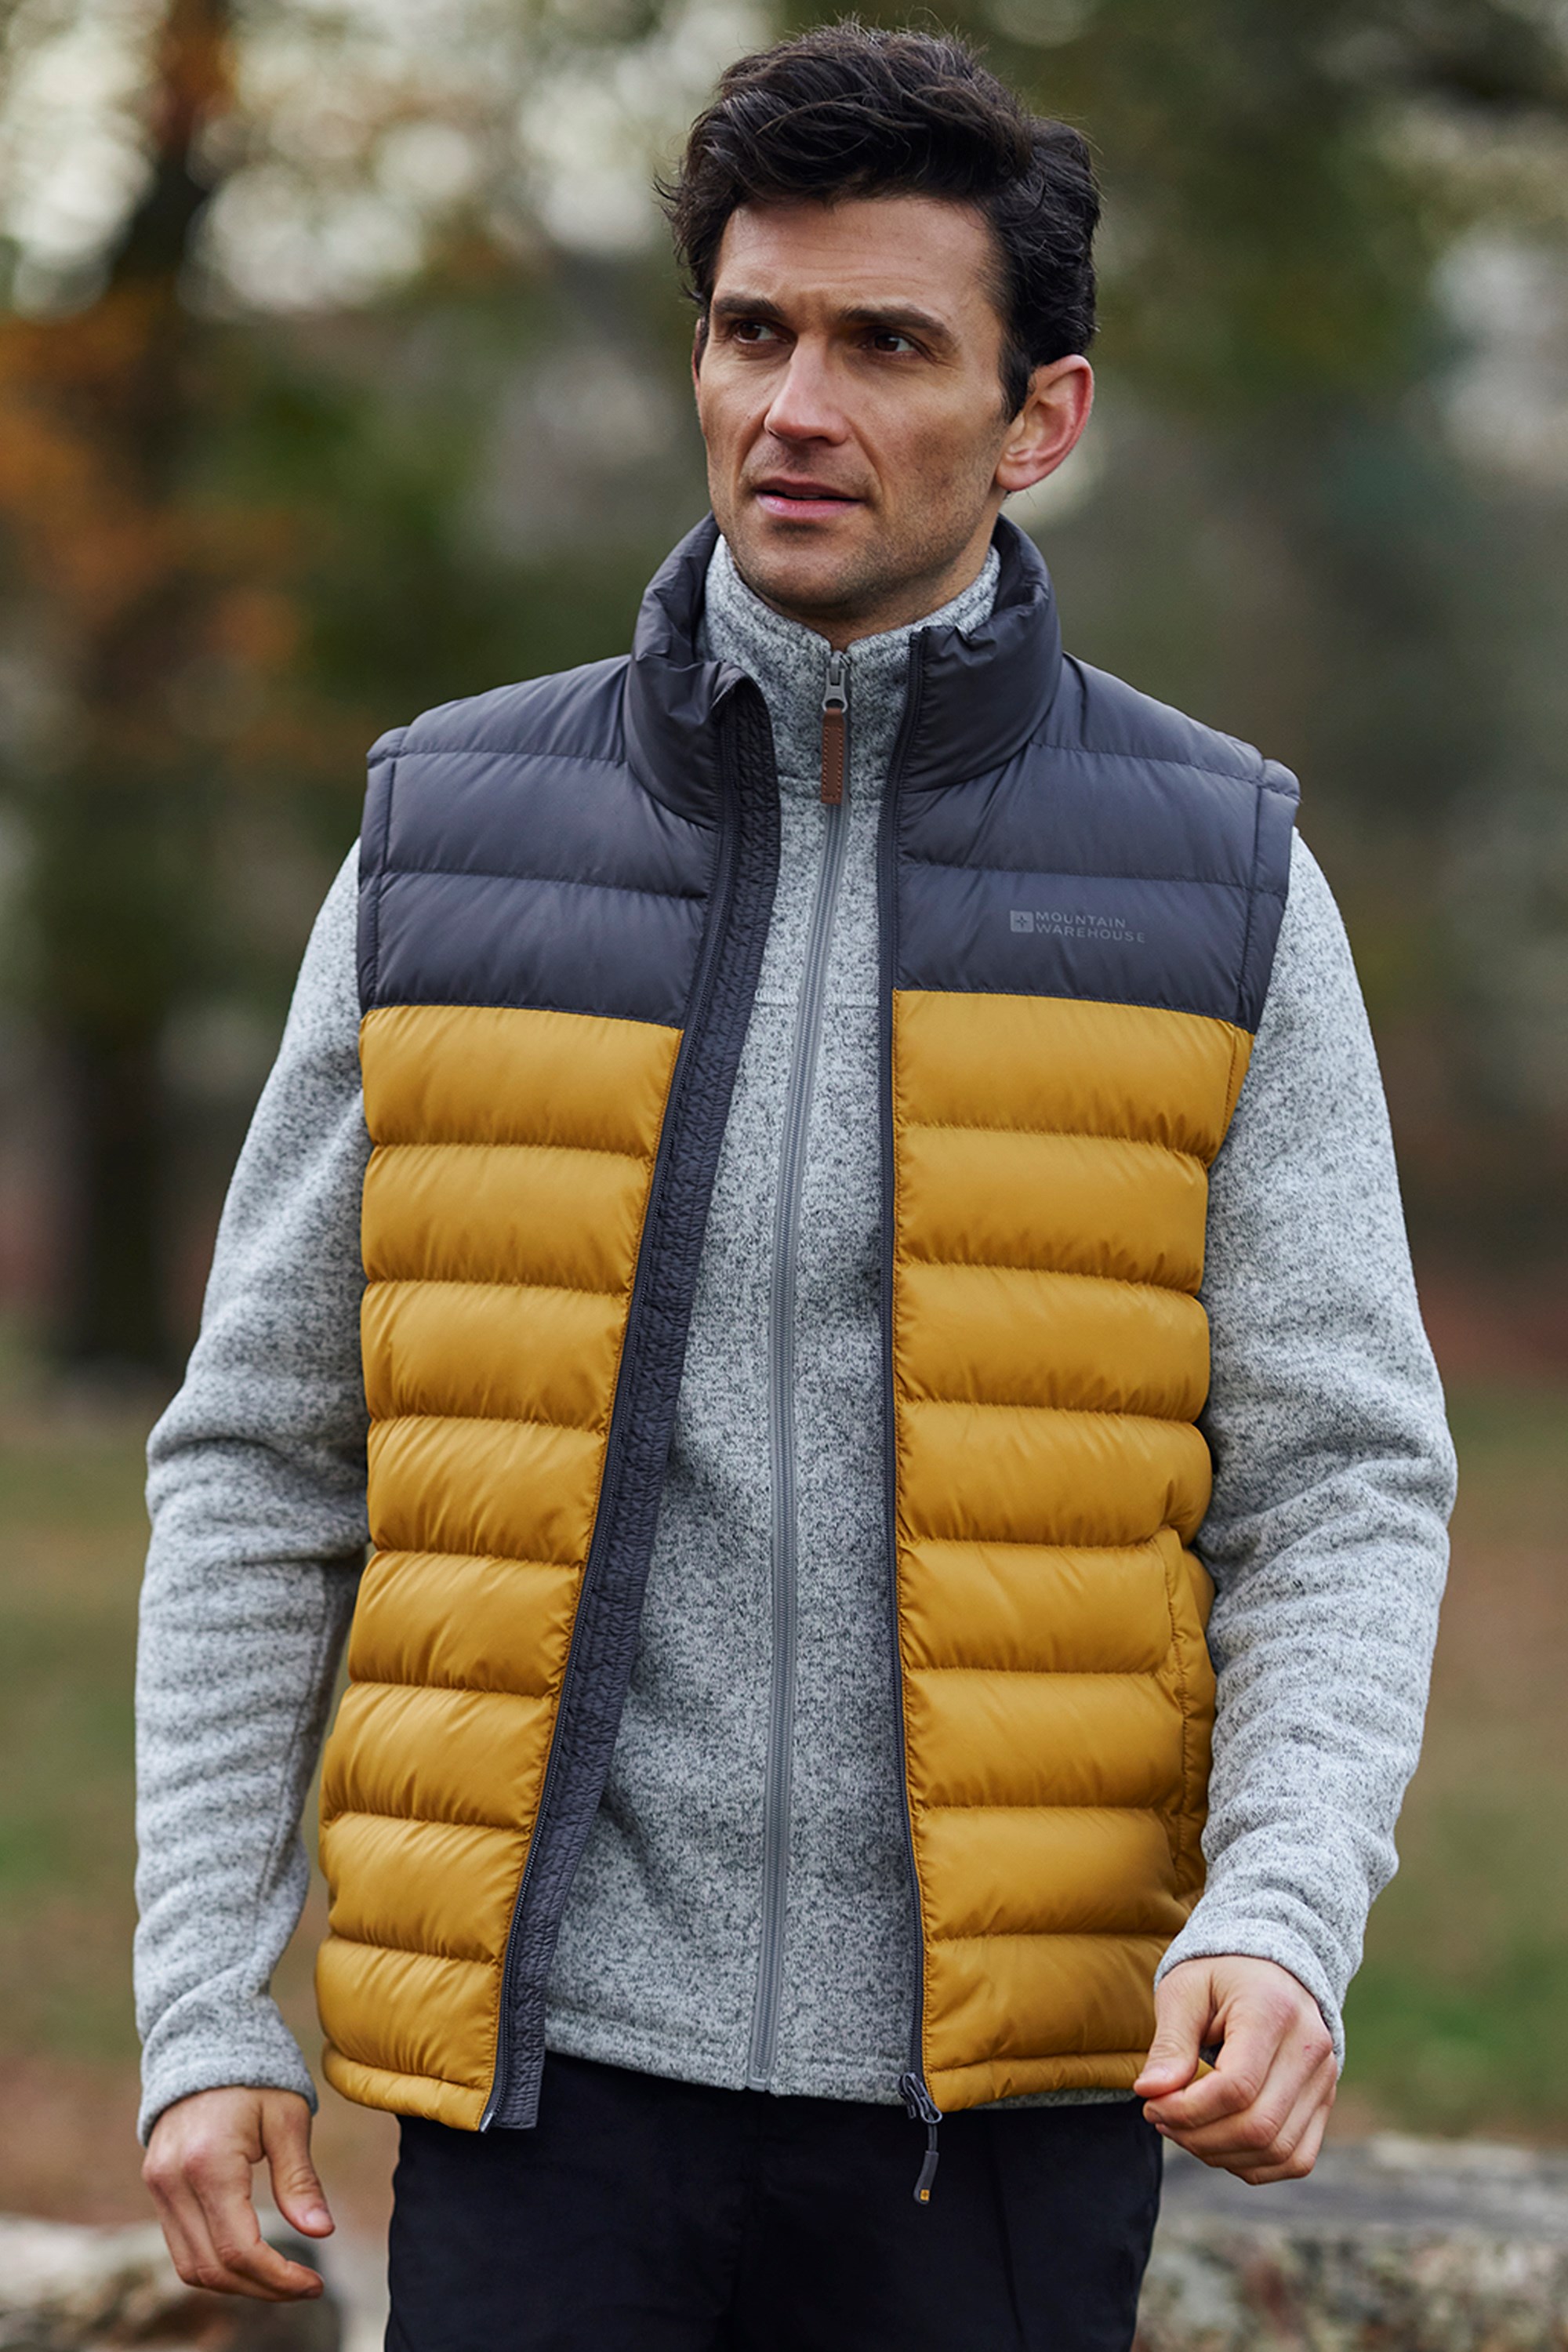 SANFASHION Men Gilet Jacket Body Warmer Lightweight Sleeveless Soft Casual 2020 Newest Autumn Winter Pocket Zip Warm Work Outerwear Walking Tops Vest Coat 